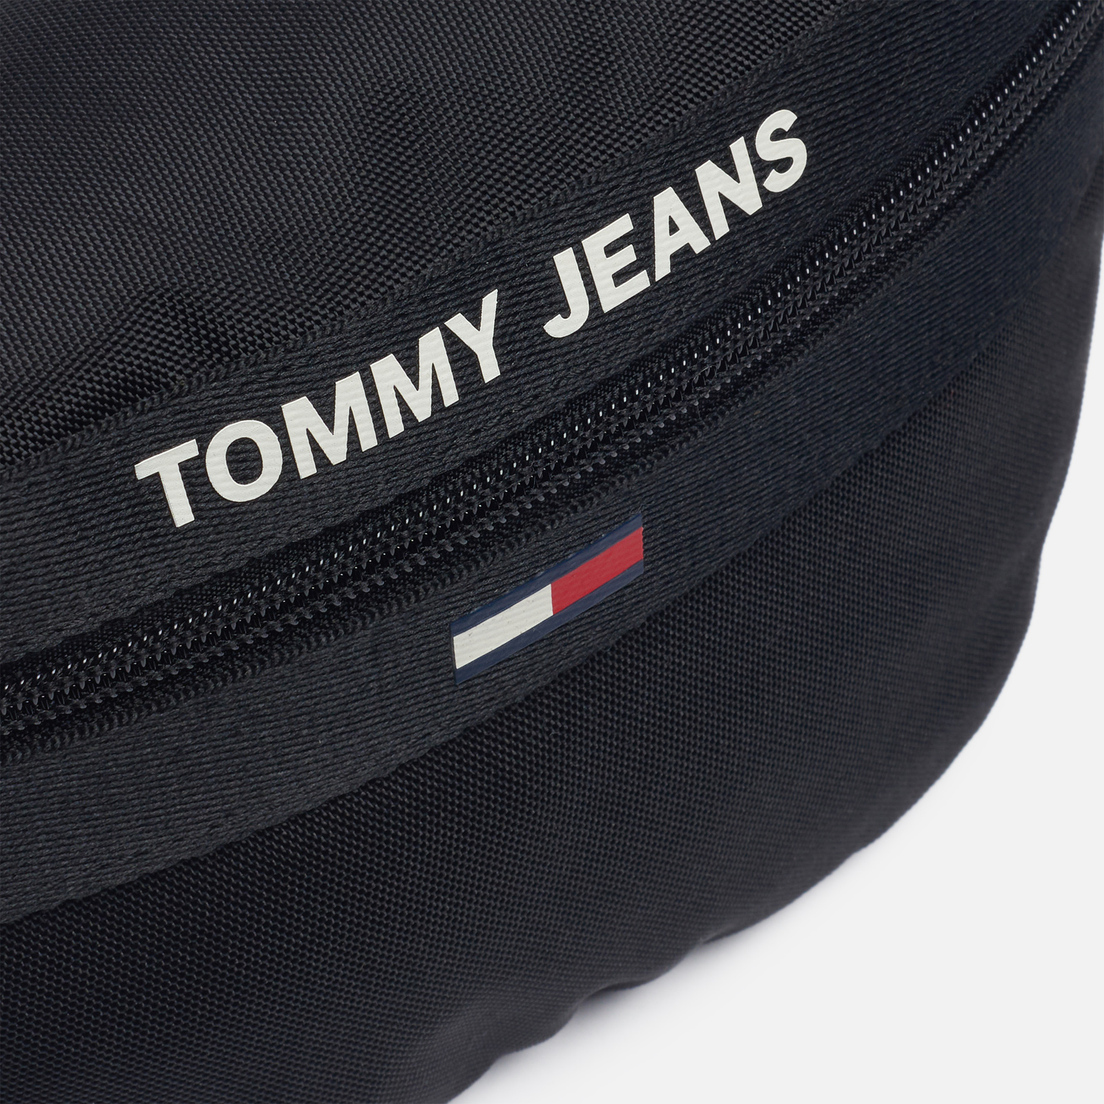 Tommy Jeans Сумка на пояс Essential Bumbag